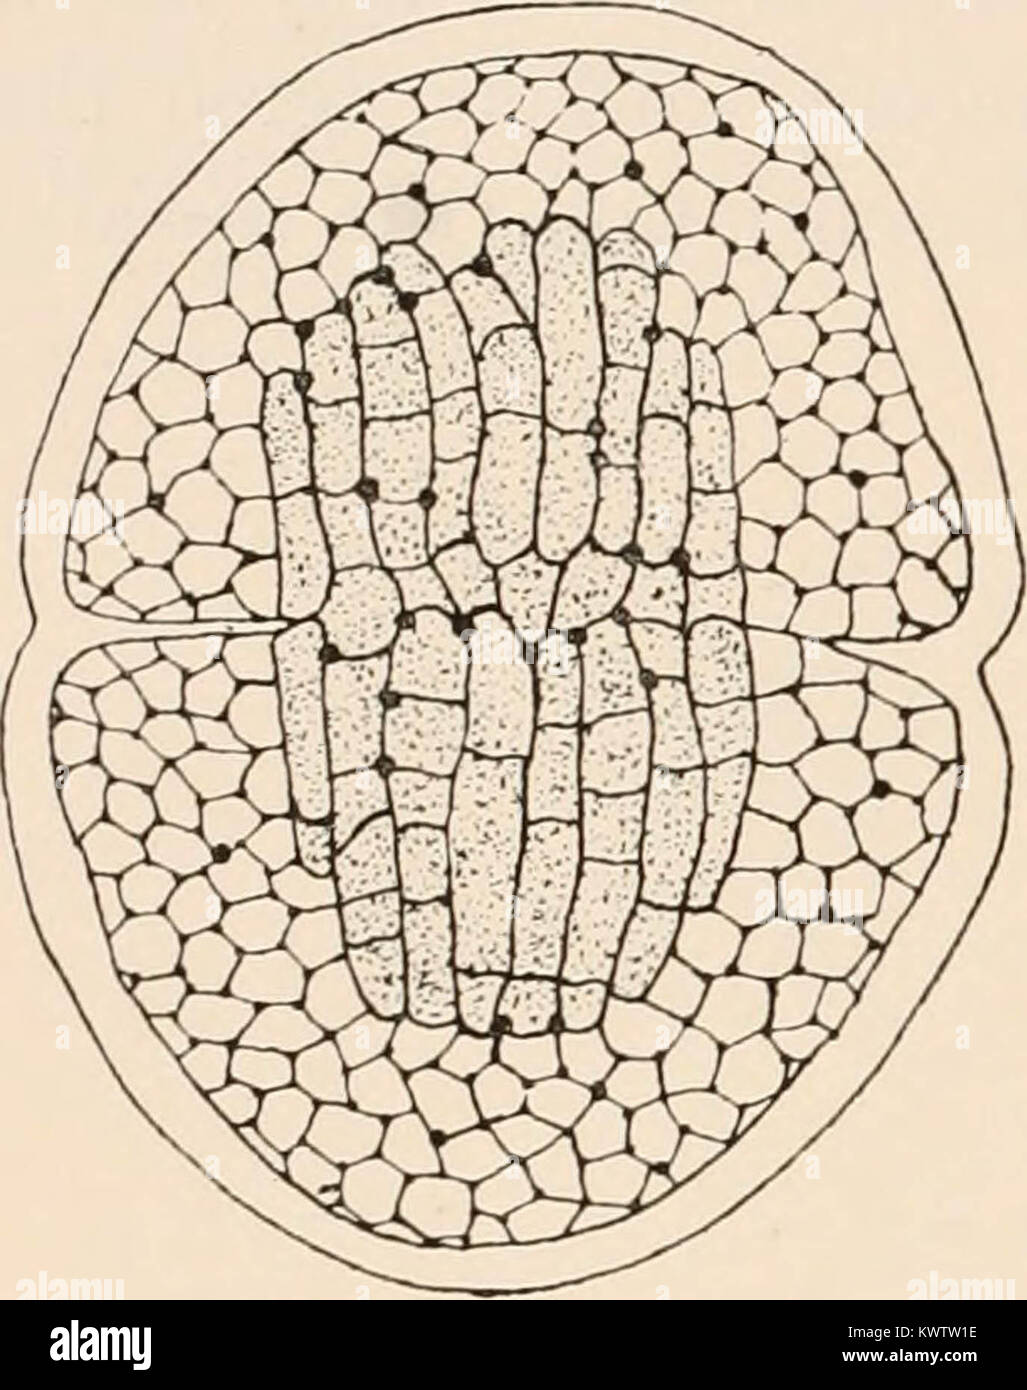 'Algæ. Vol. I. Myxophyceæ, Peridinieæ, Bacillarieæ, Chlorophyceæ, together with a brief summary of the occurrence and distribution of freshwat4er Algæ' (1916) Stock Photo